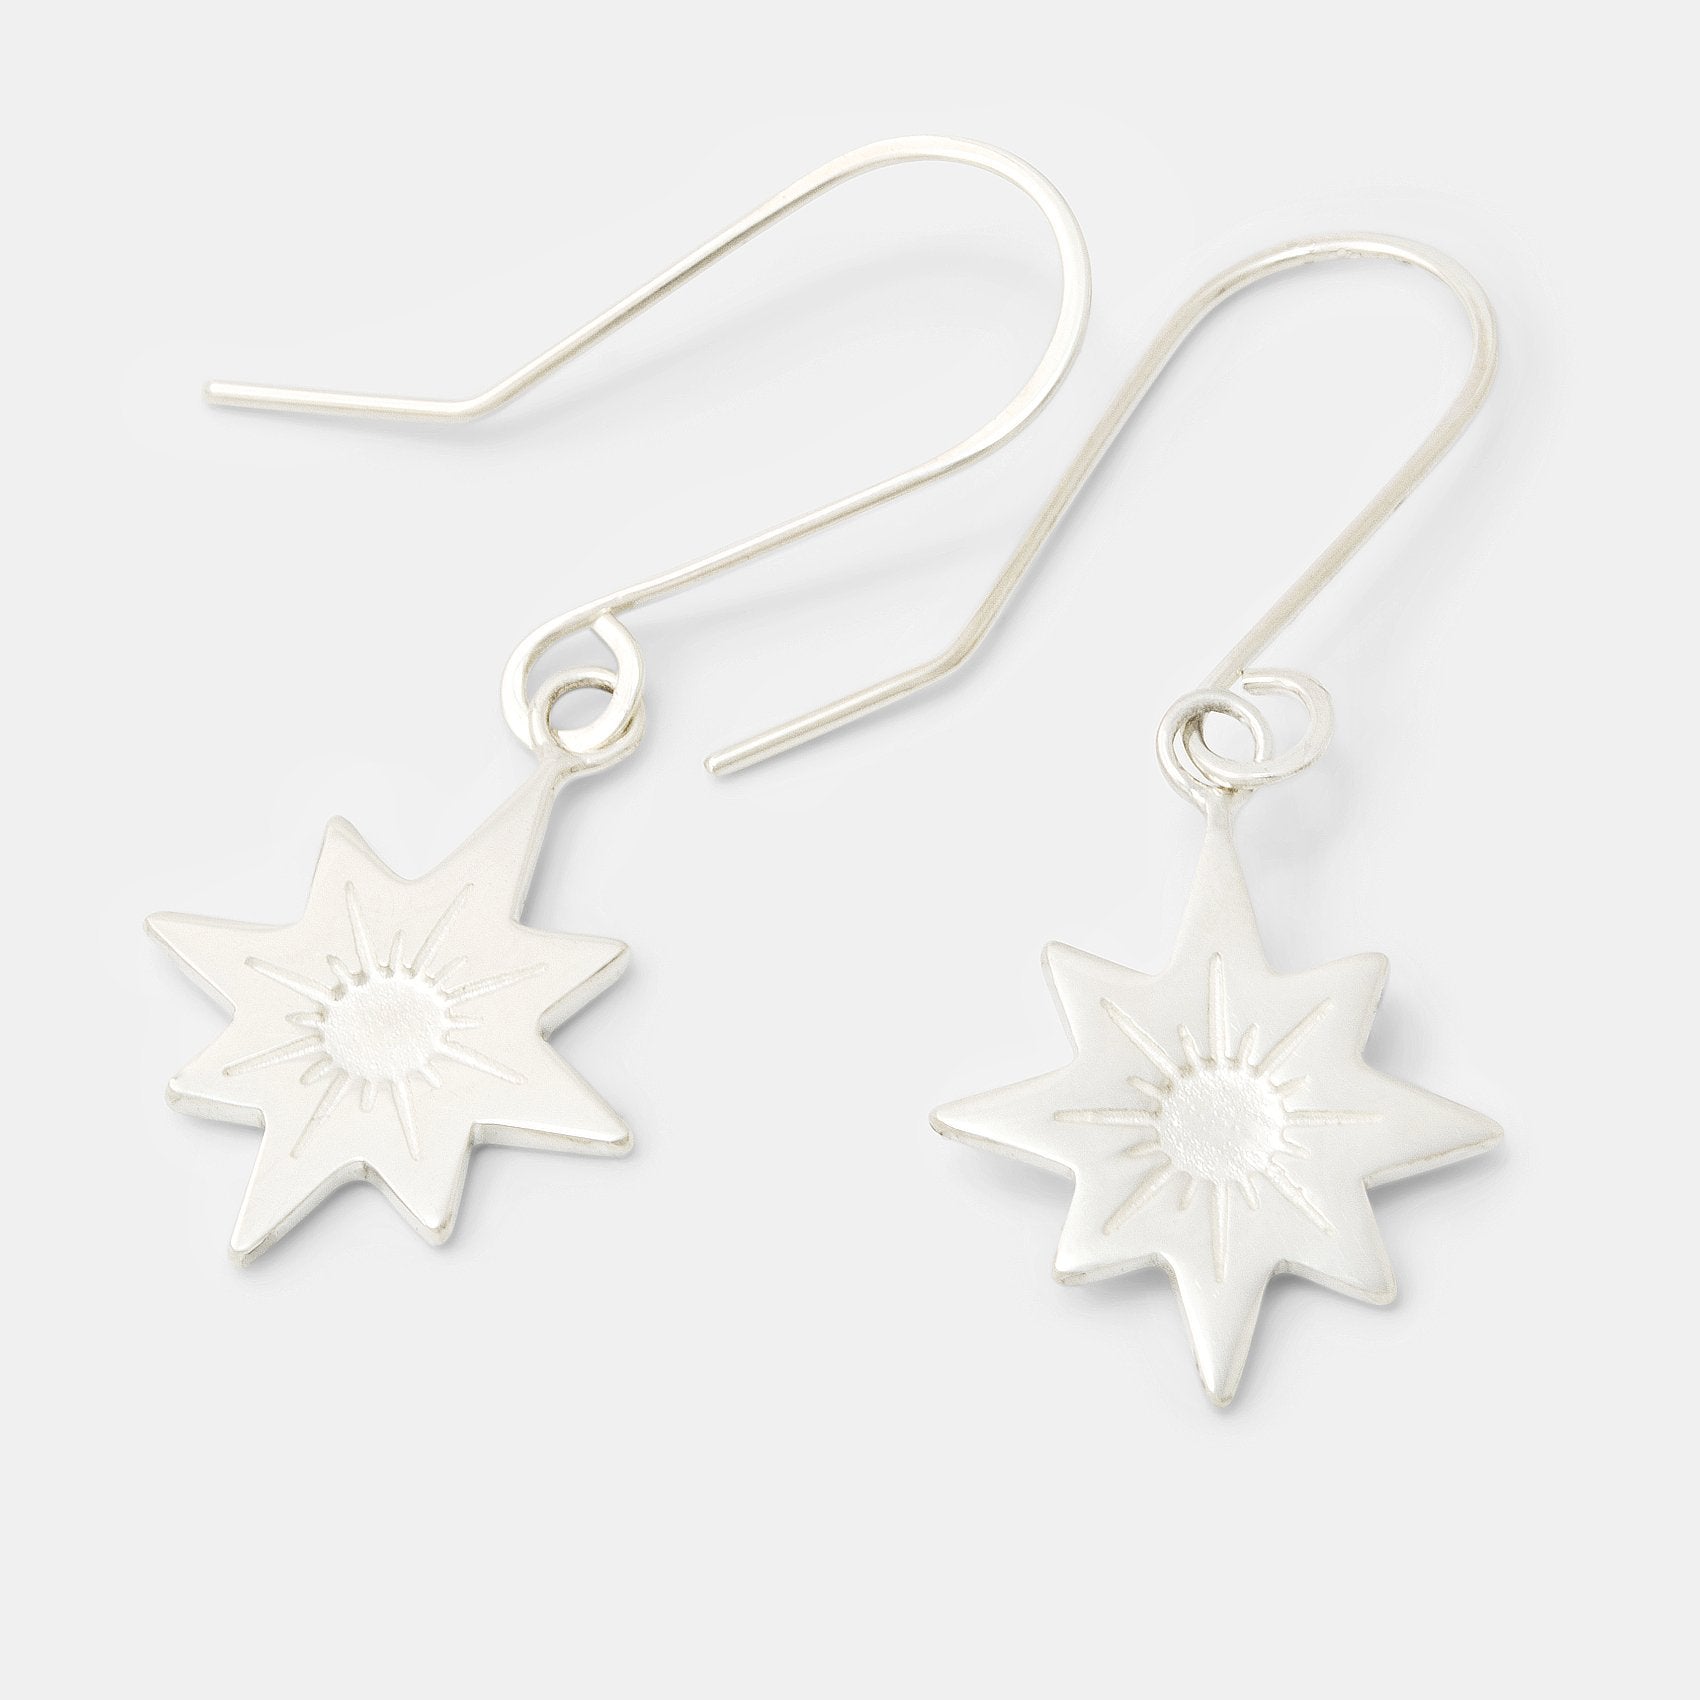 Guiding star drop earrings - Simone Walsh Jewellery Australia